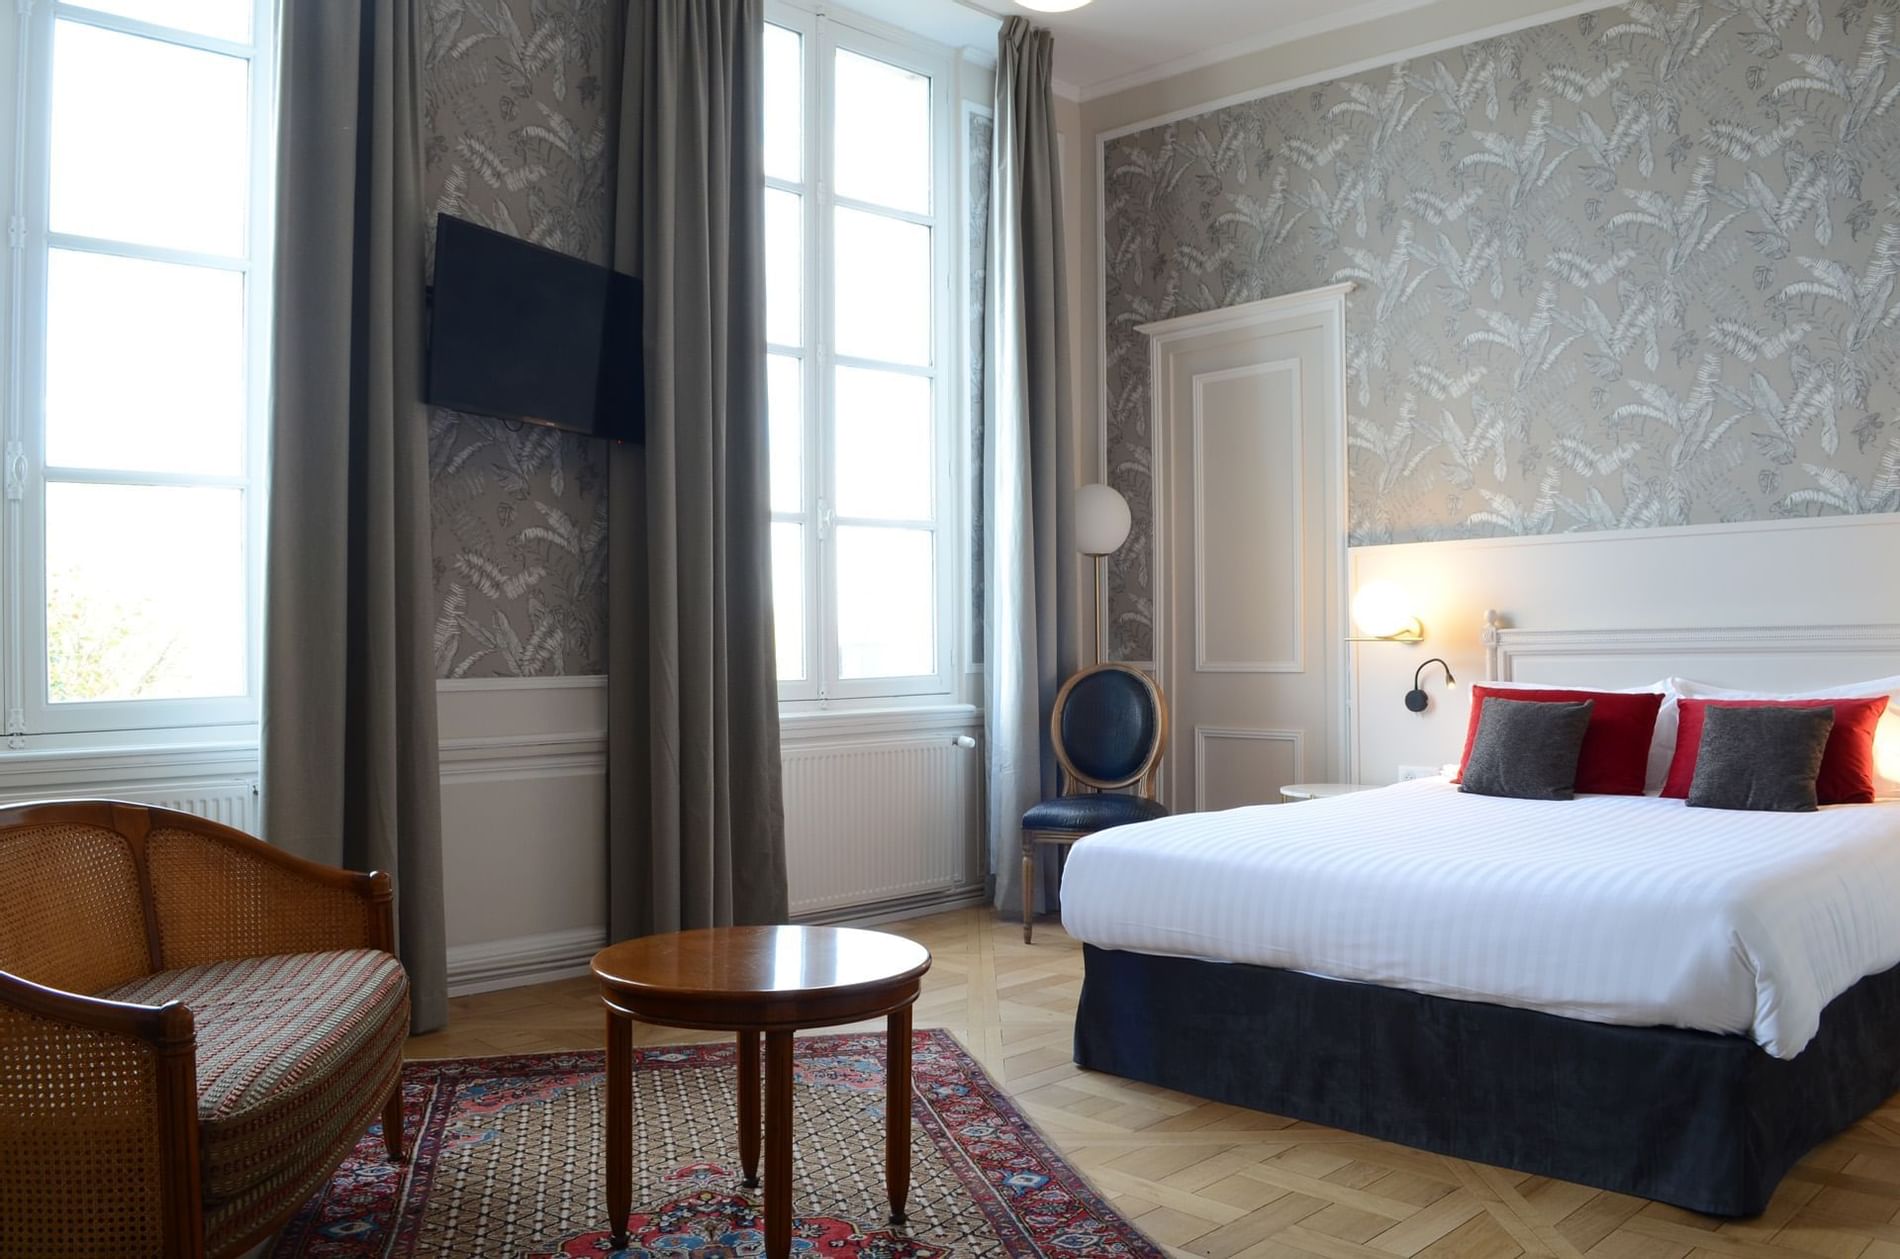 Prestige Loire Room at Hotel Anne d'Anjou in Saumur, France